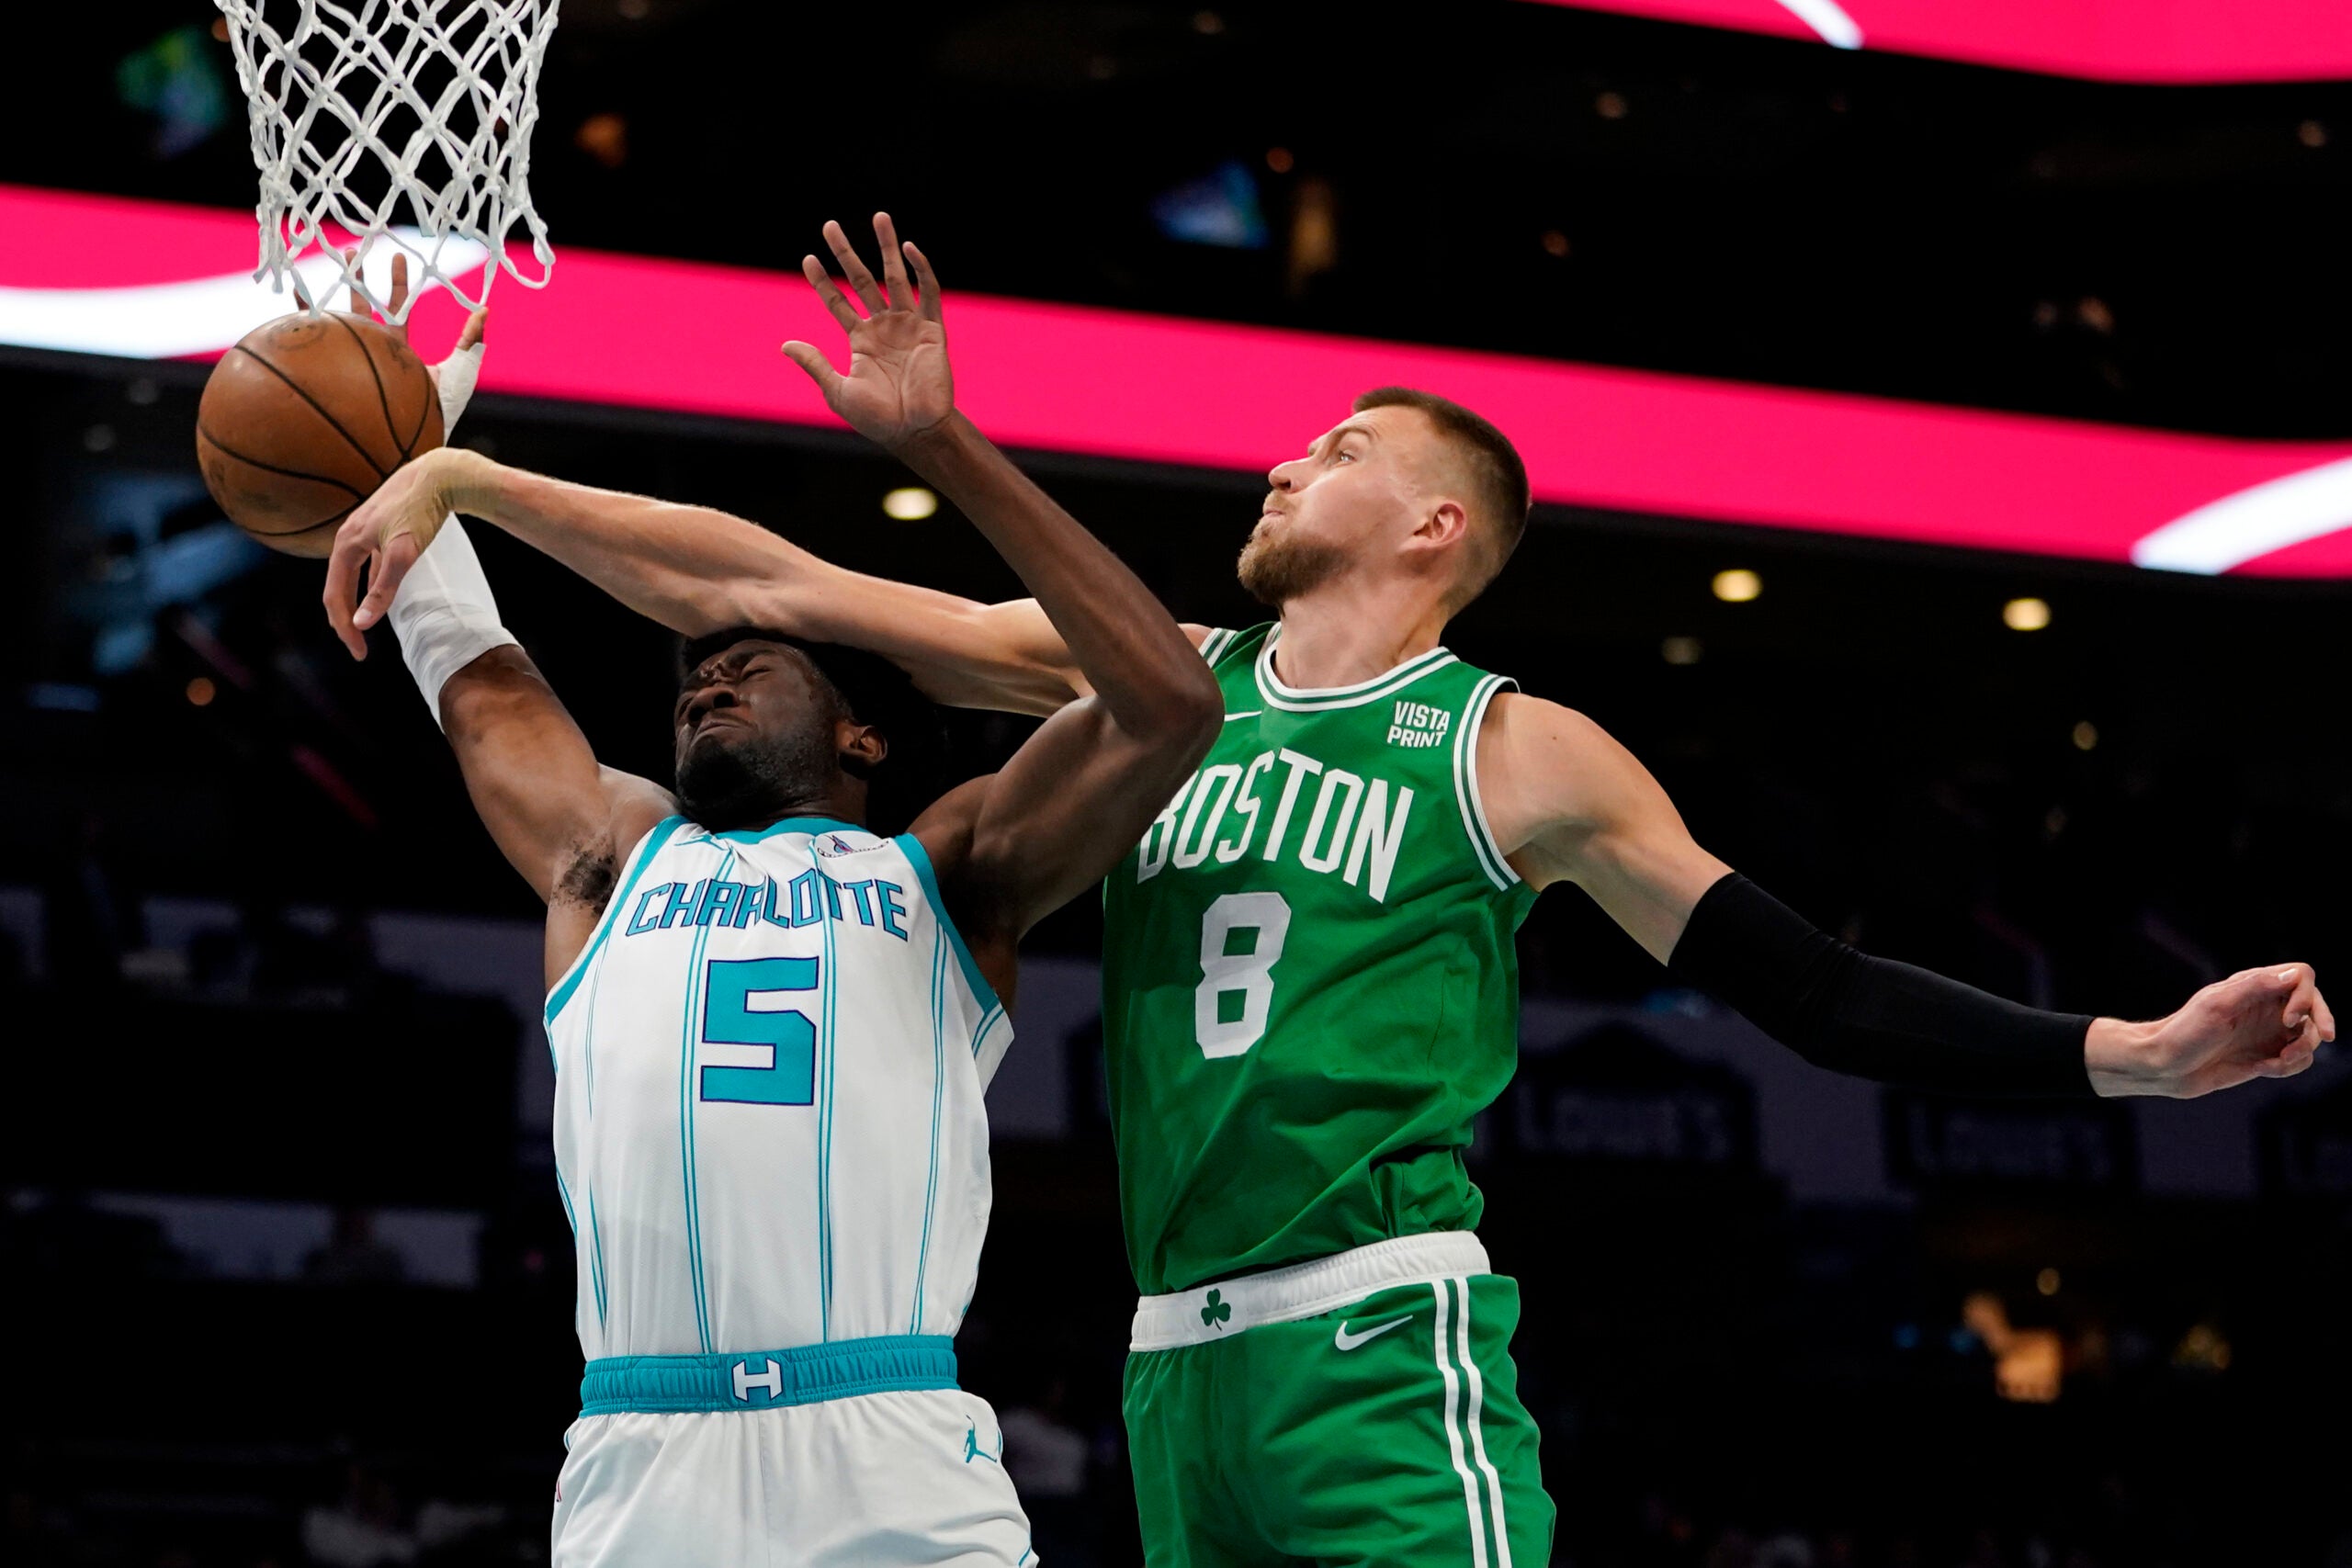 Celtics news: JD Davison nearly put up a triple-double in NBA G League